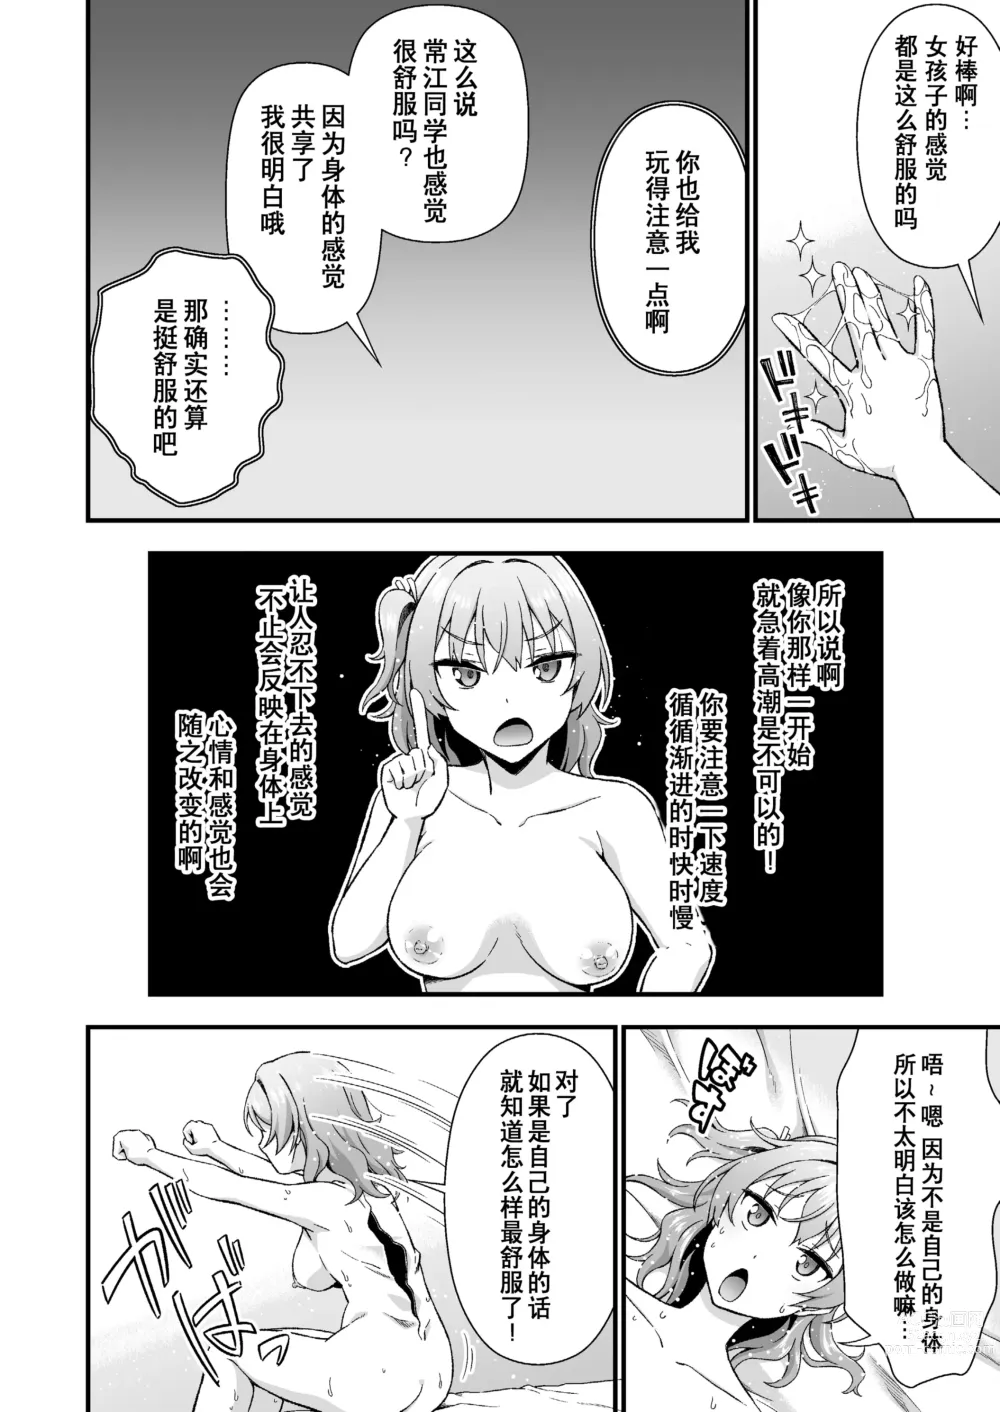 Page 12 of doujinshi Kawa-ka Daiko o kawari